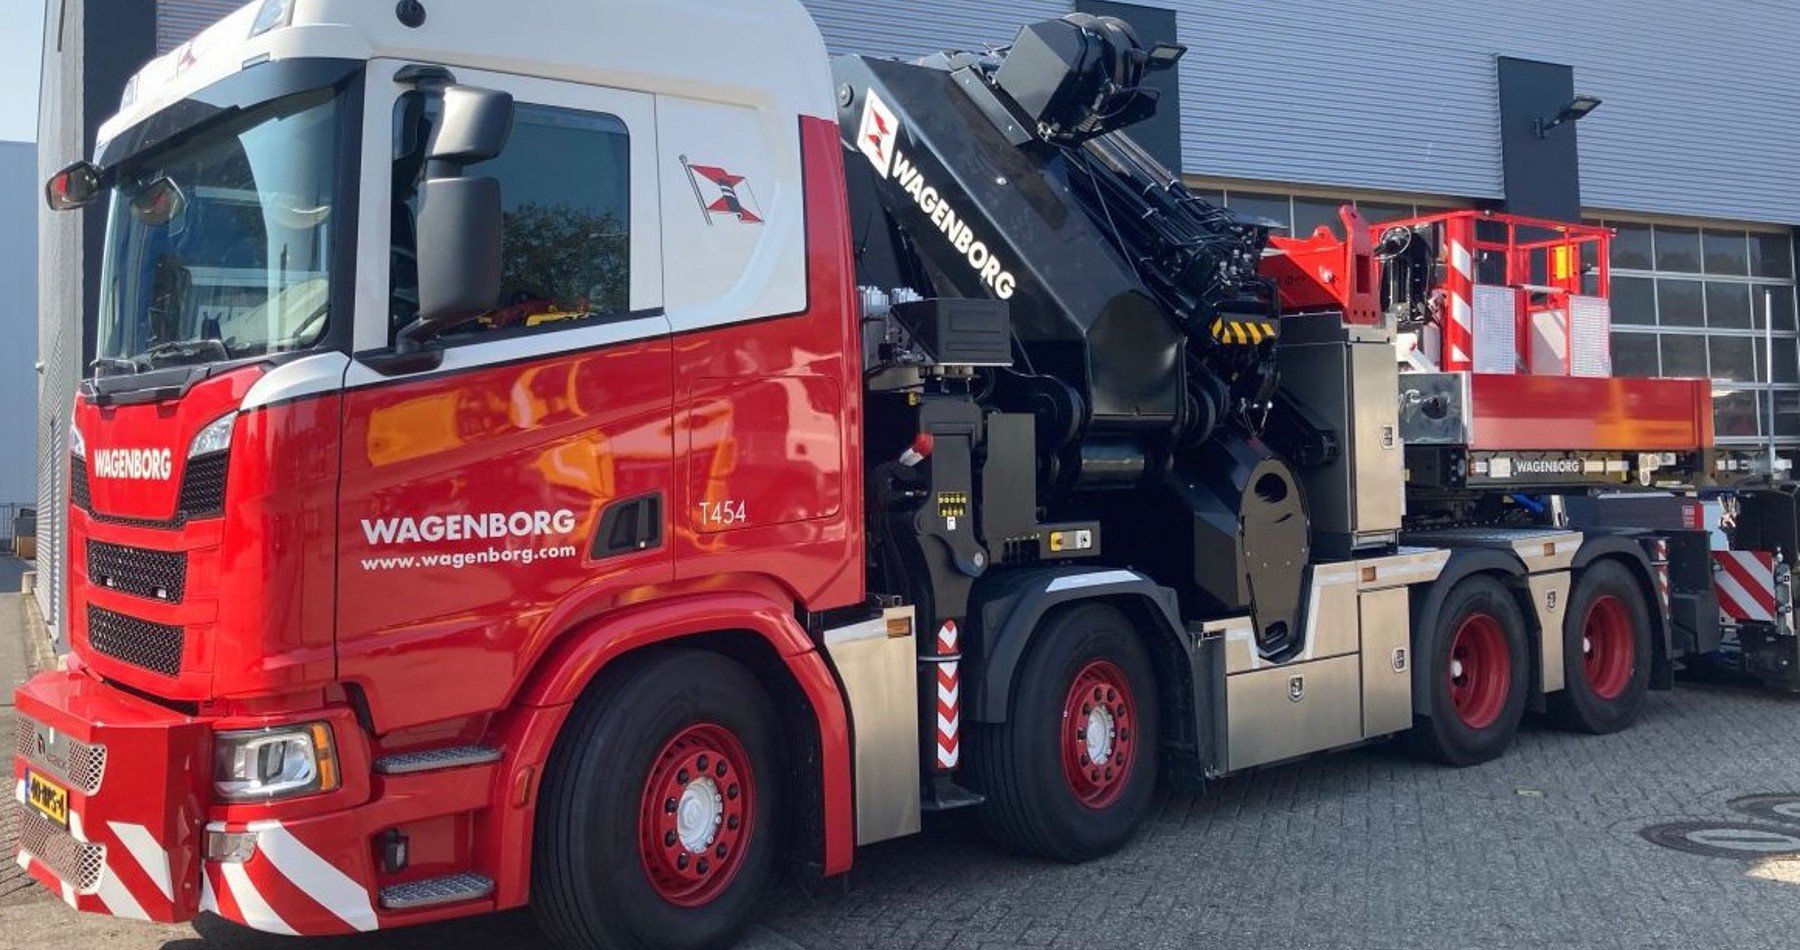 Third knuckle boom crane for Wagenborg Nedlift delivered!